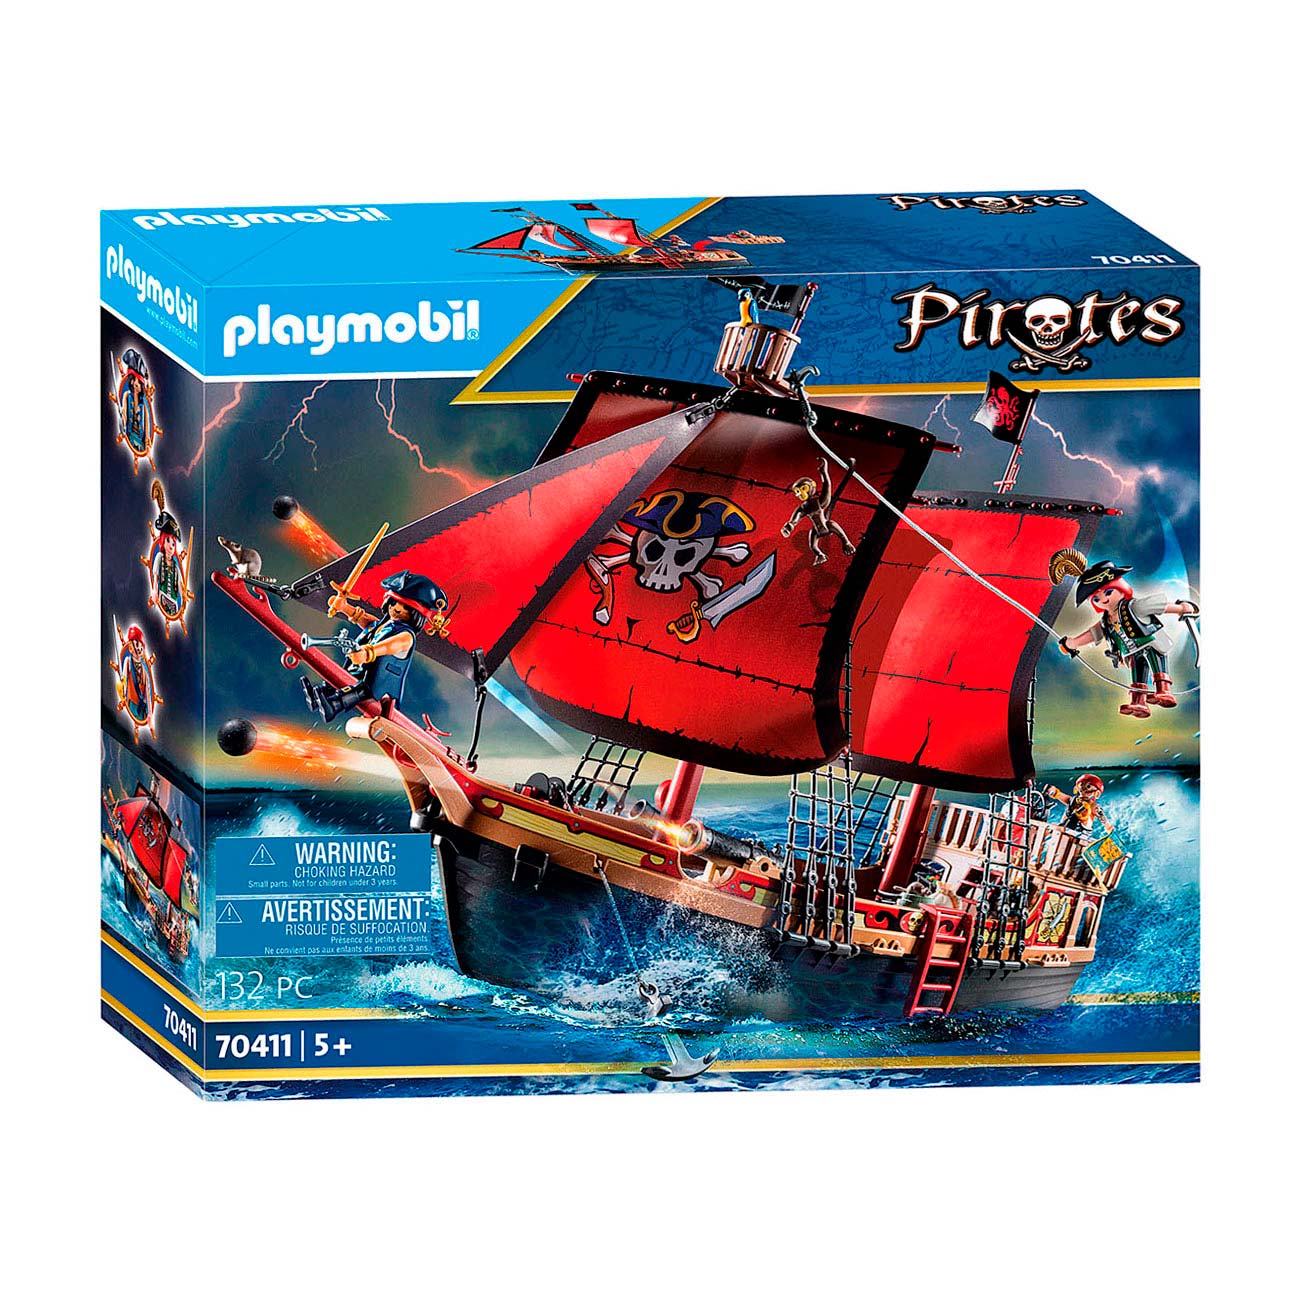 Playmobil Pirates Piratenschip